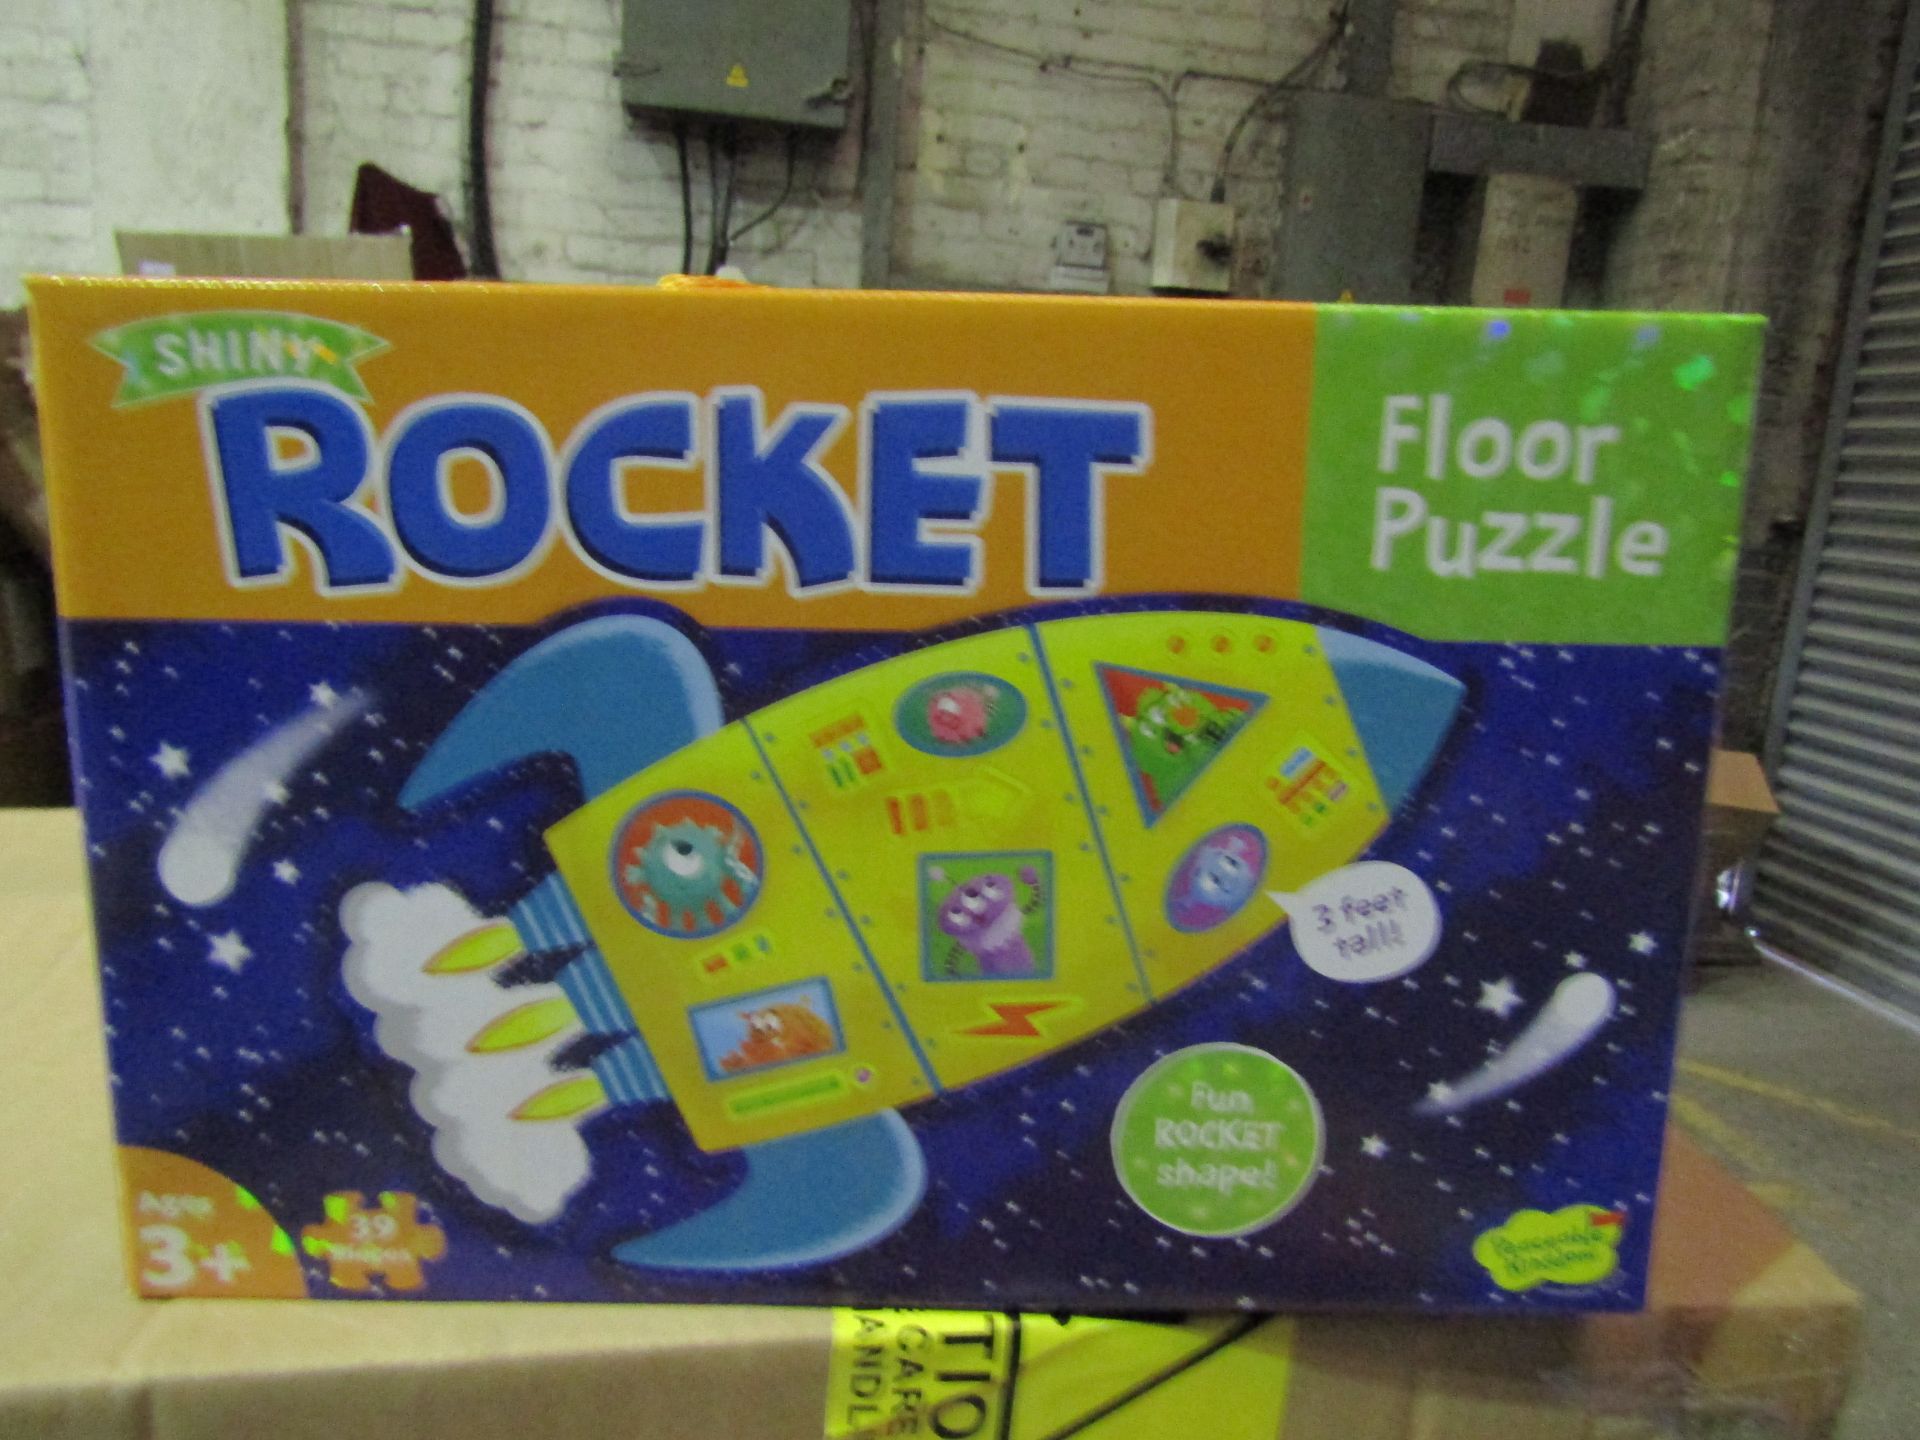 Shiny Rocket Floor Puzzle 3FT Tall New & Boxed